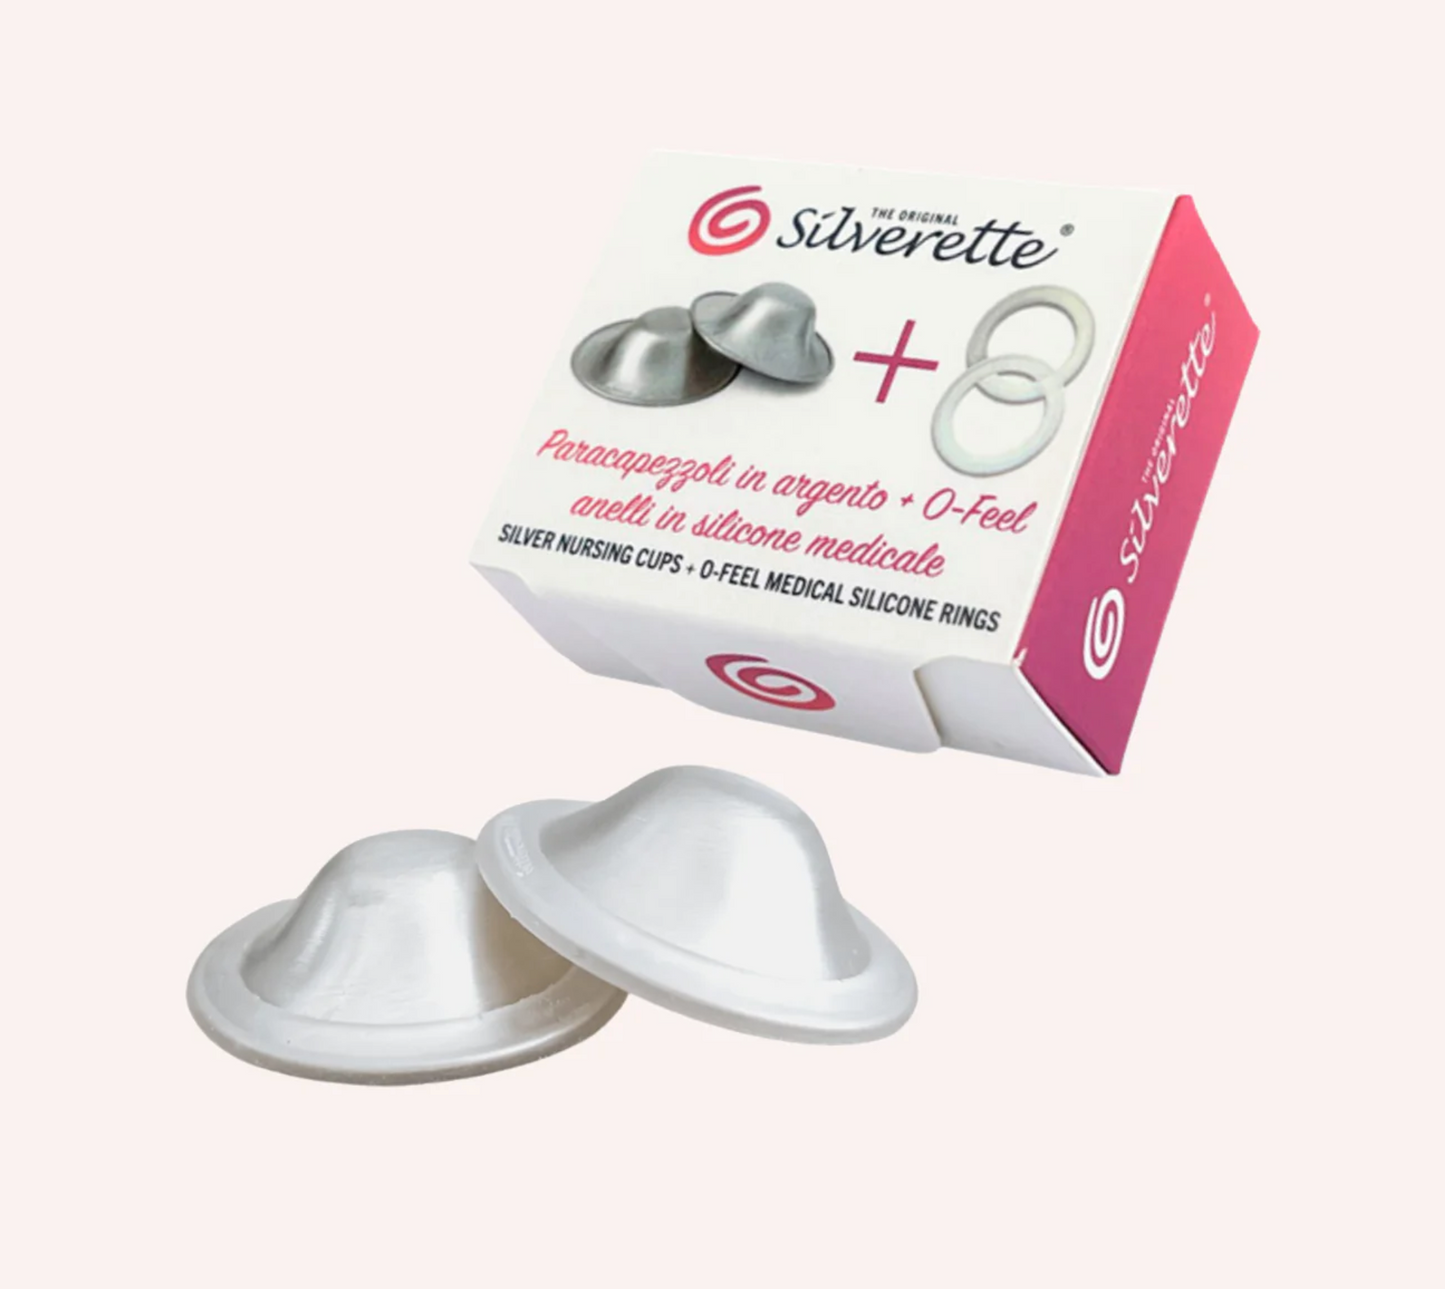 Silverette Nursing Cups + O-Feel